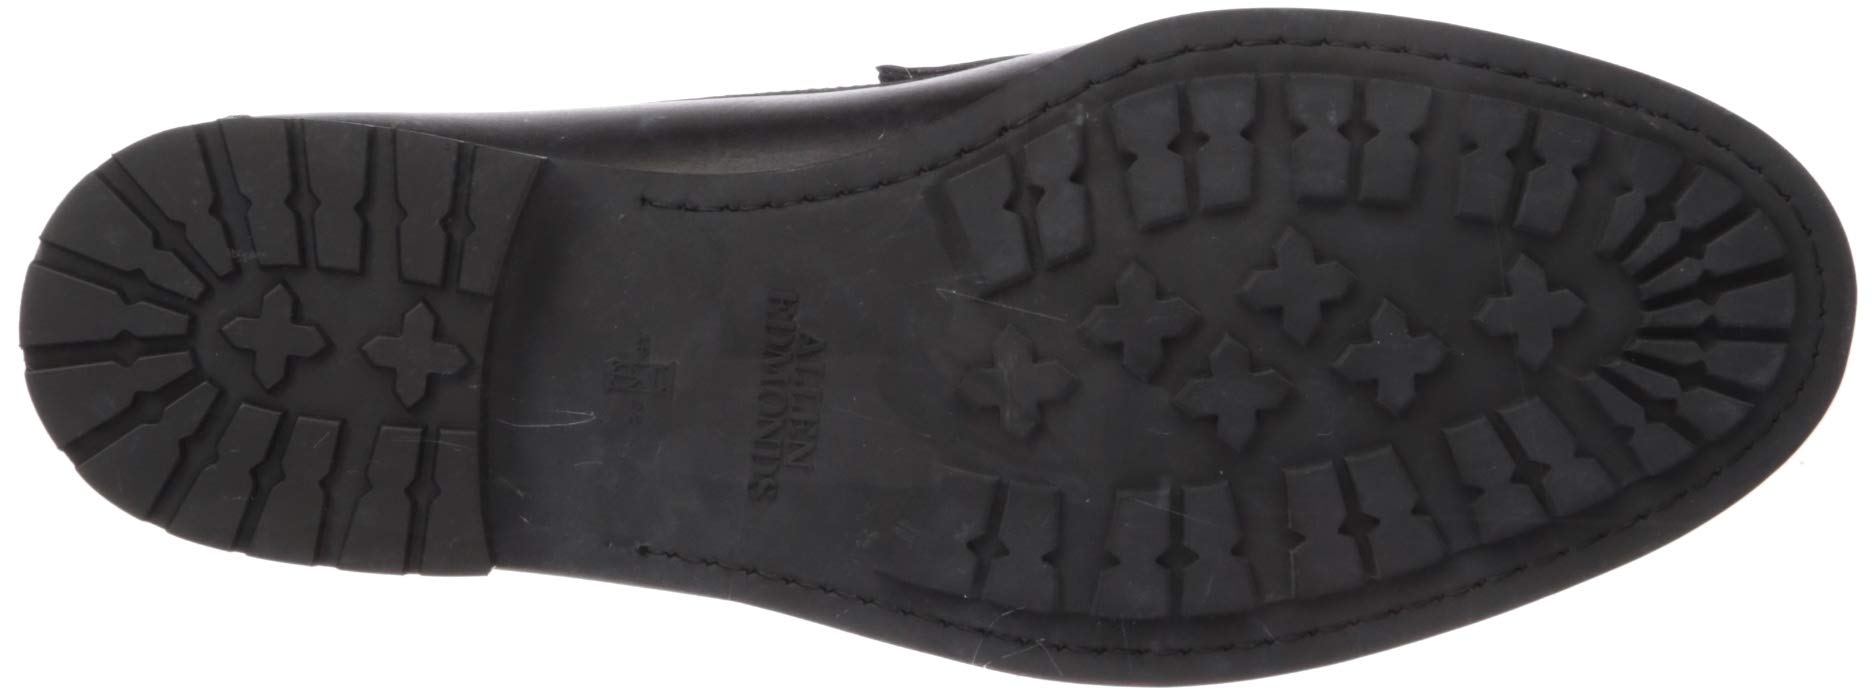 Allen Edmonds Men's Arezzo Leather Loafers